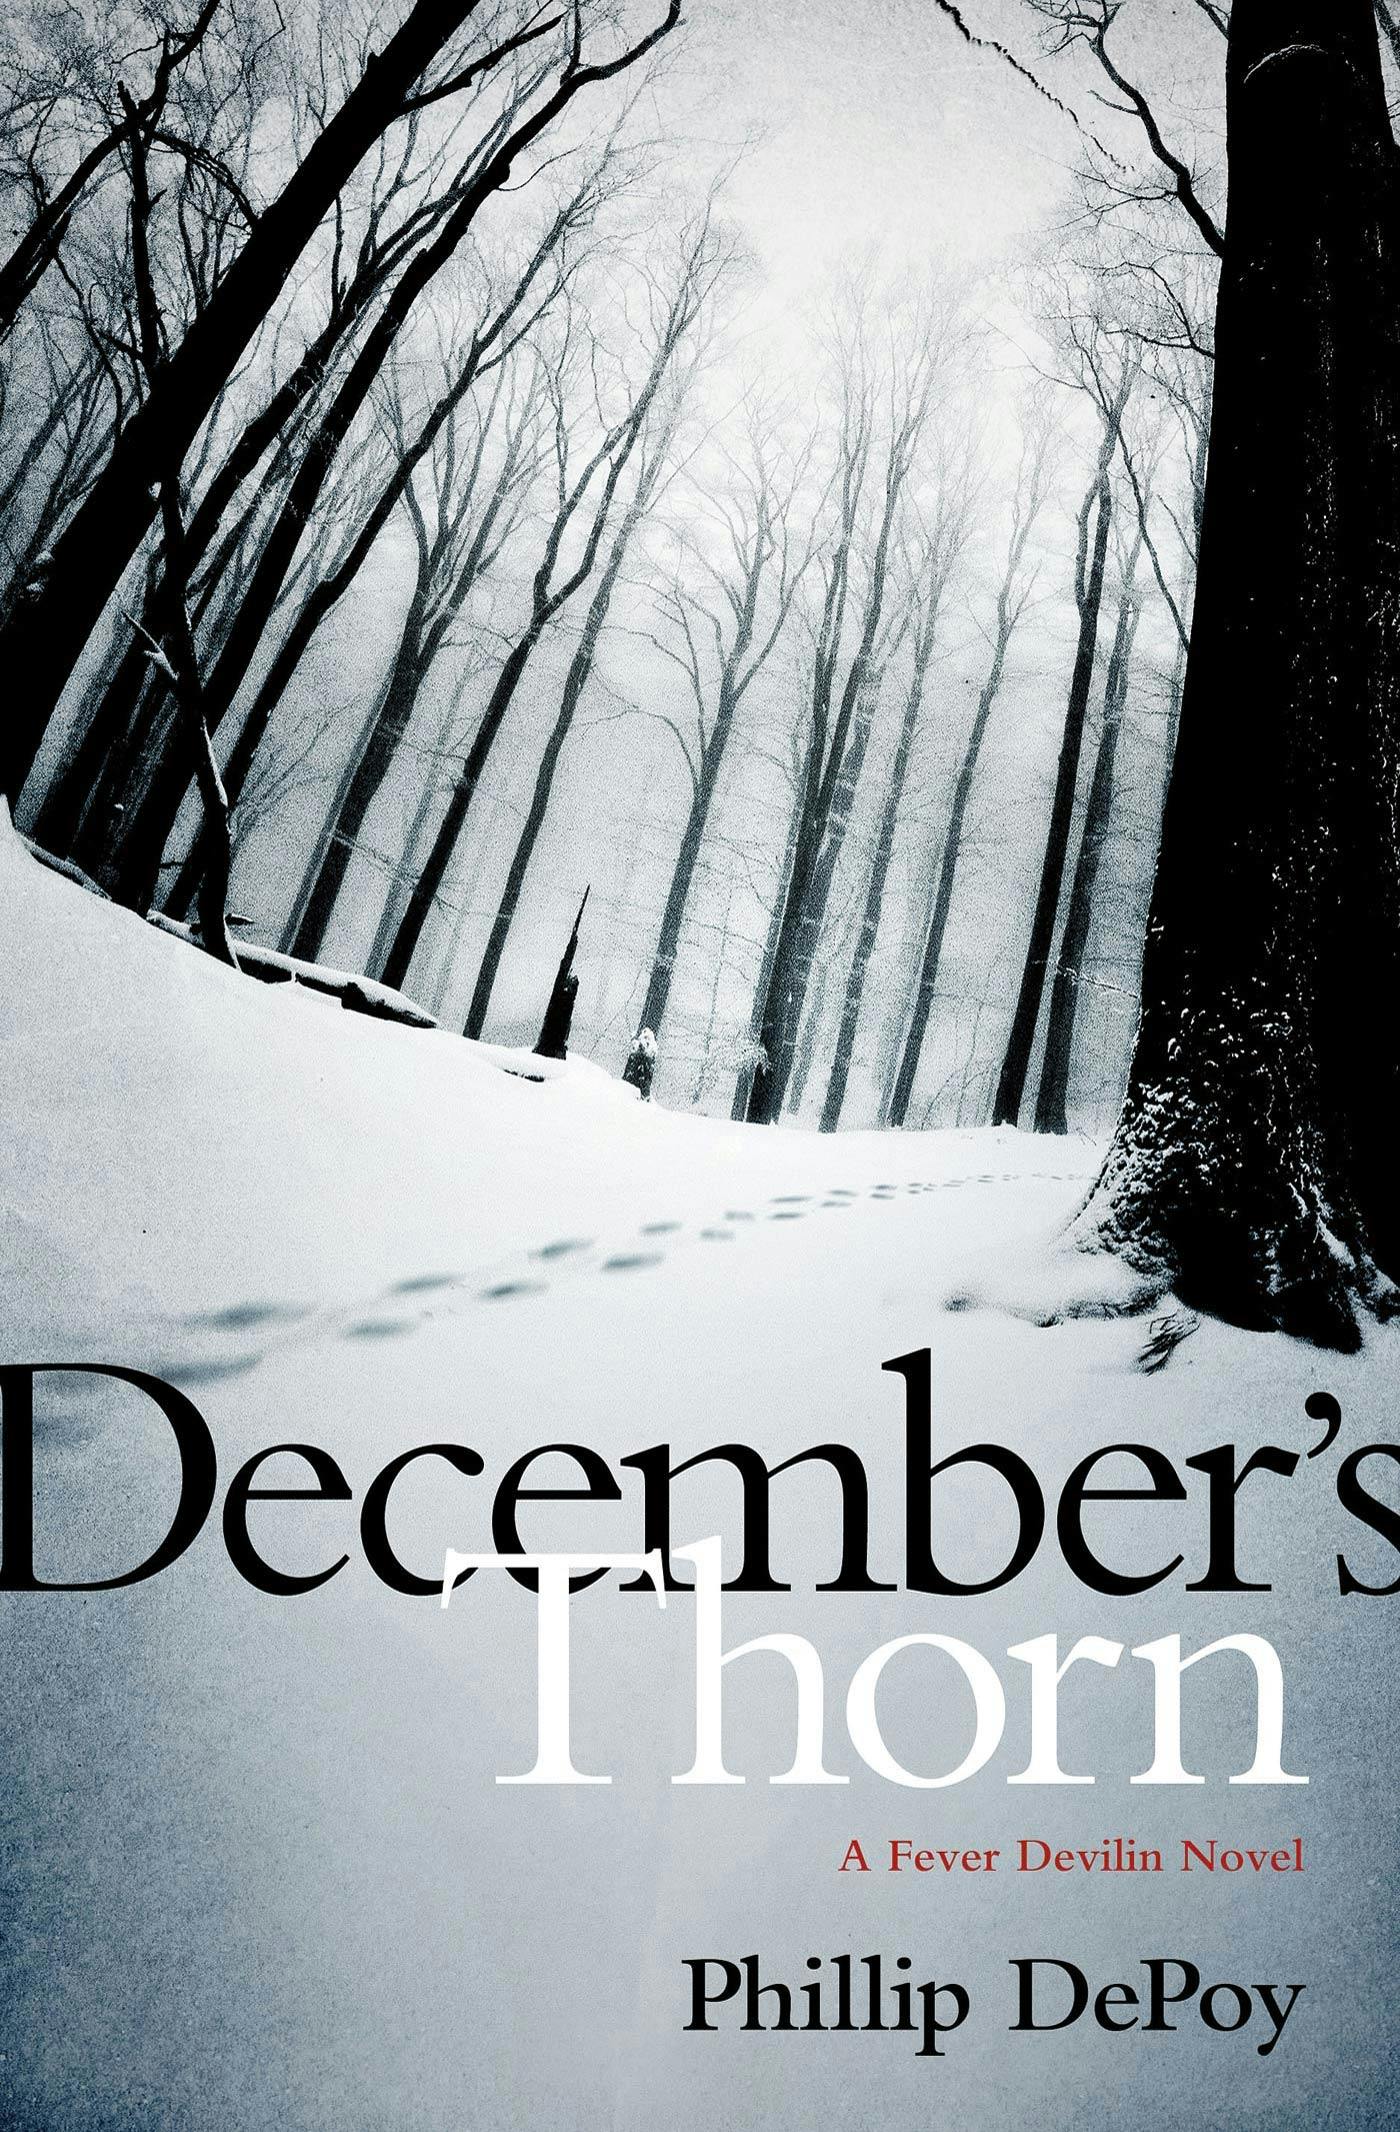 December's Thorn